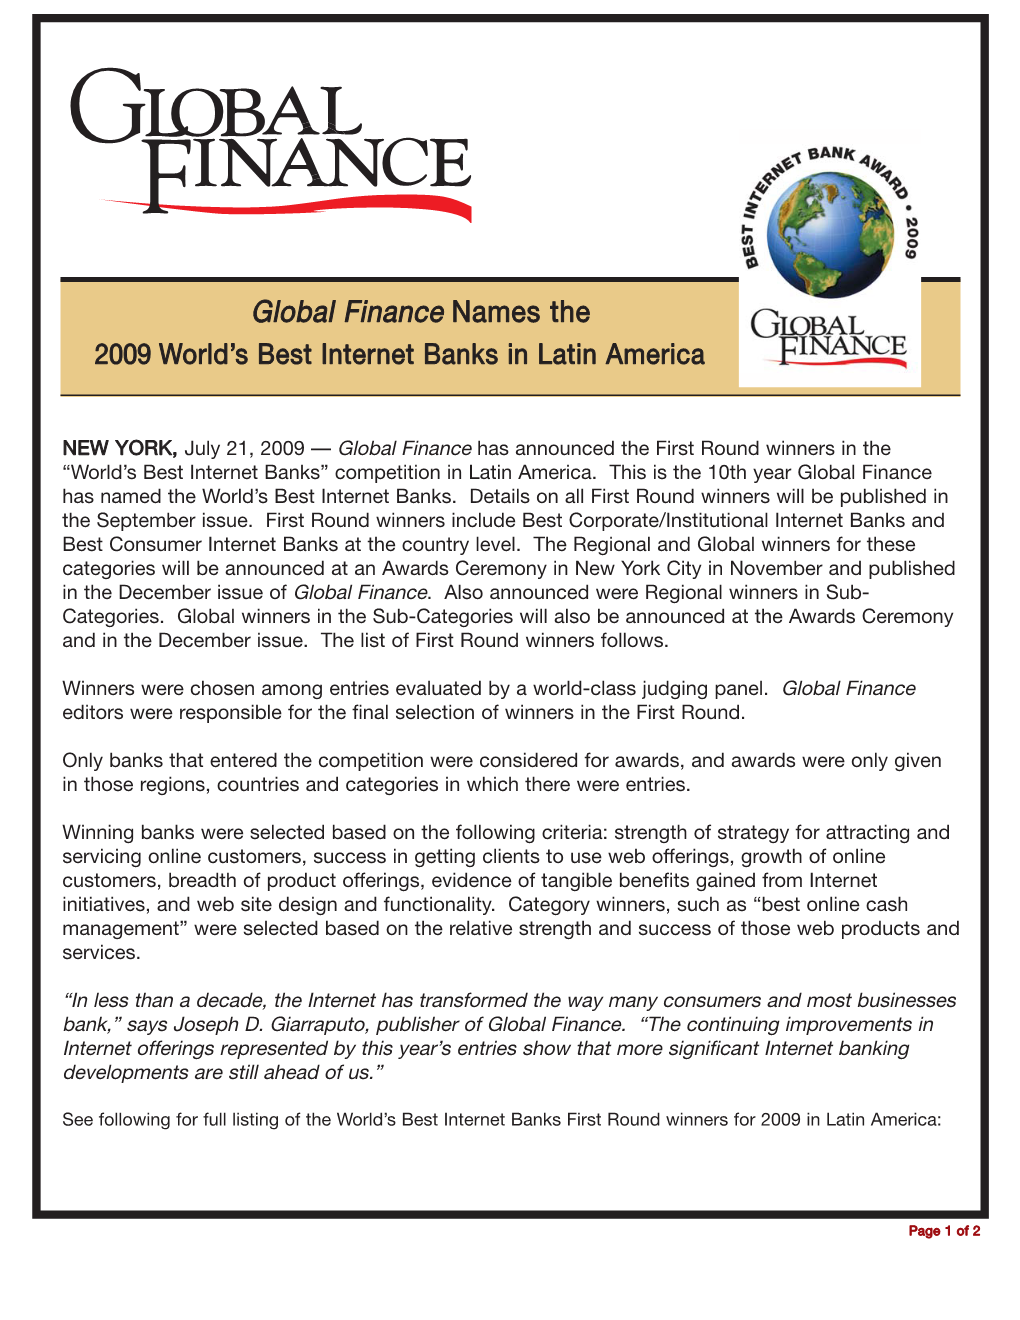 Global Finance Names the 2009 World’S Best Internet Banks in Latin America